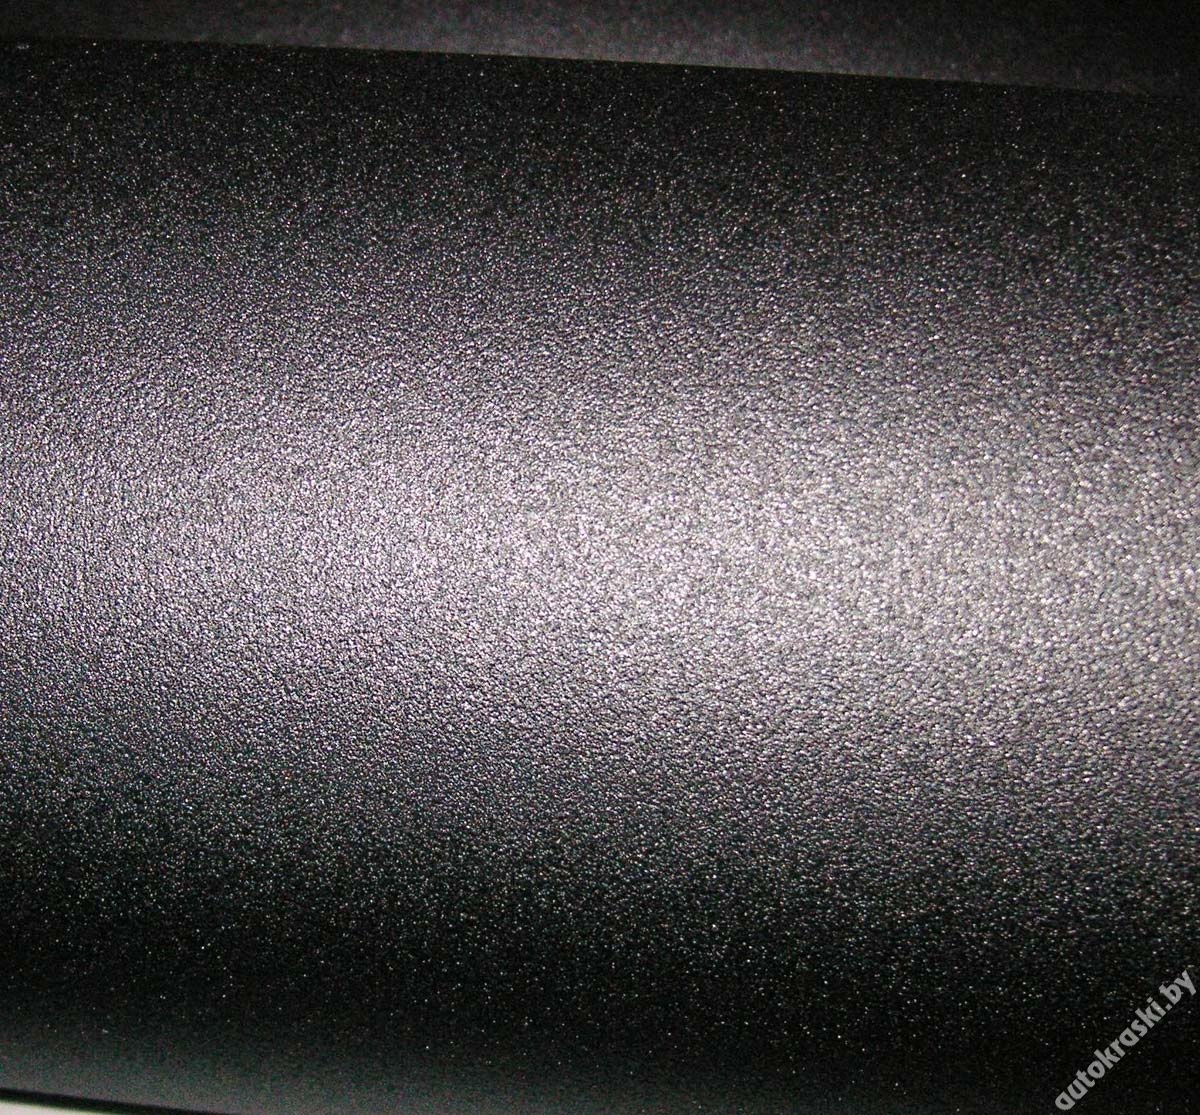 Краска черная глянцевая автомобильная. KPMF k81219. KPMF 81219. Пленка KPMF k81219. Пленка матовая текстурированная черная 3м 300.